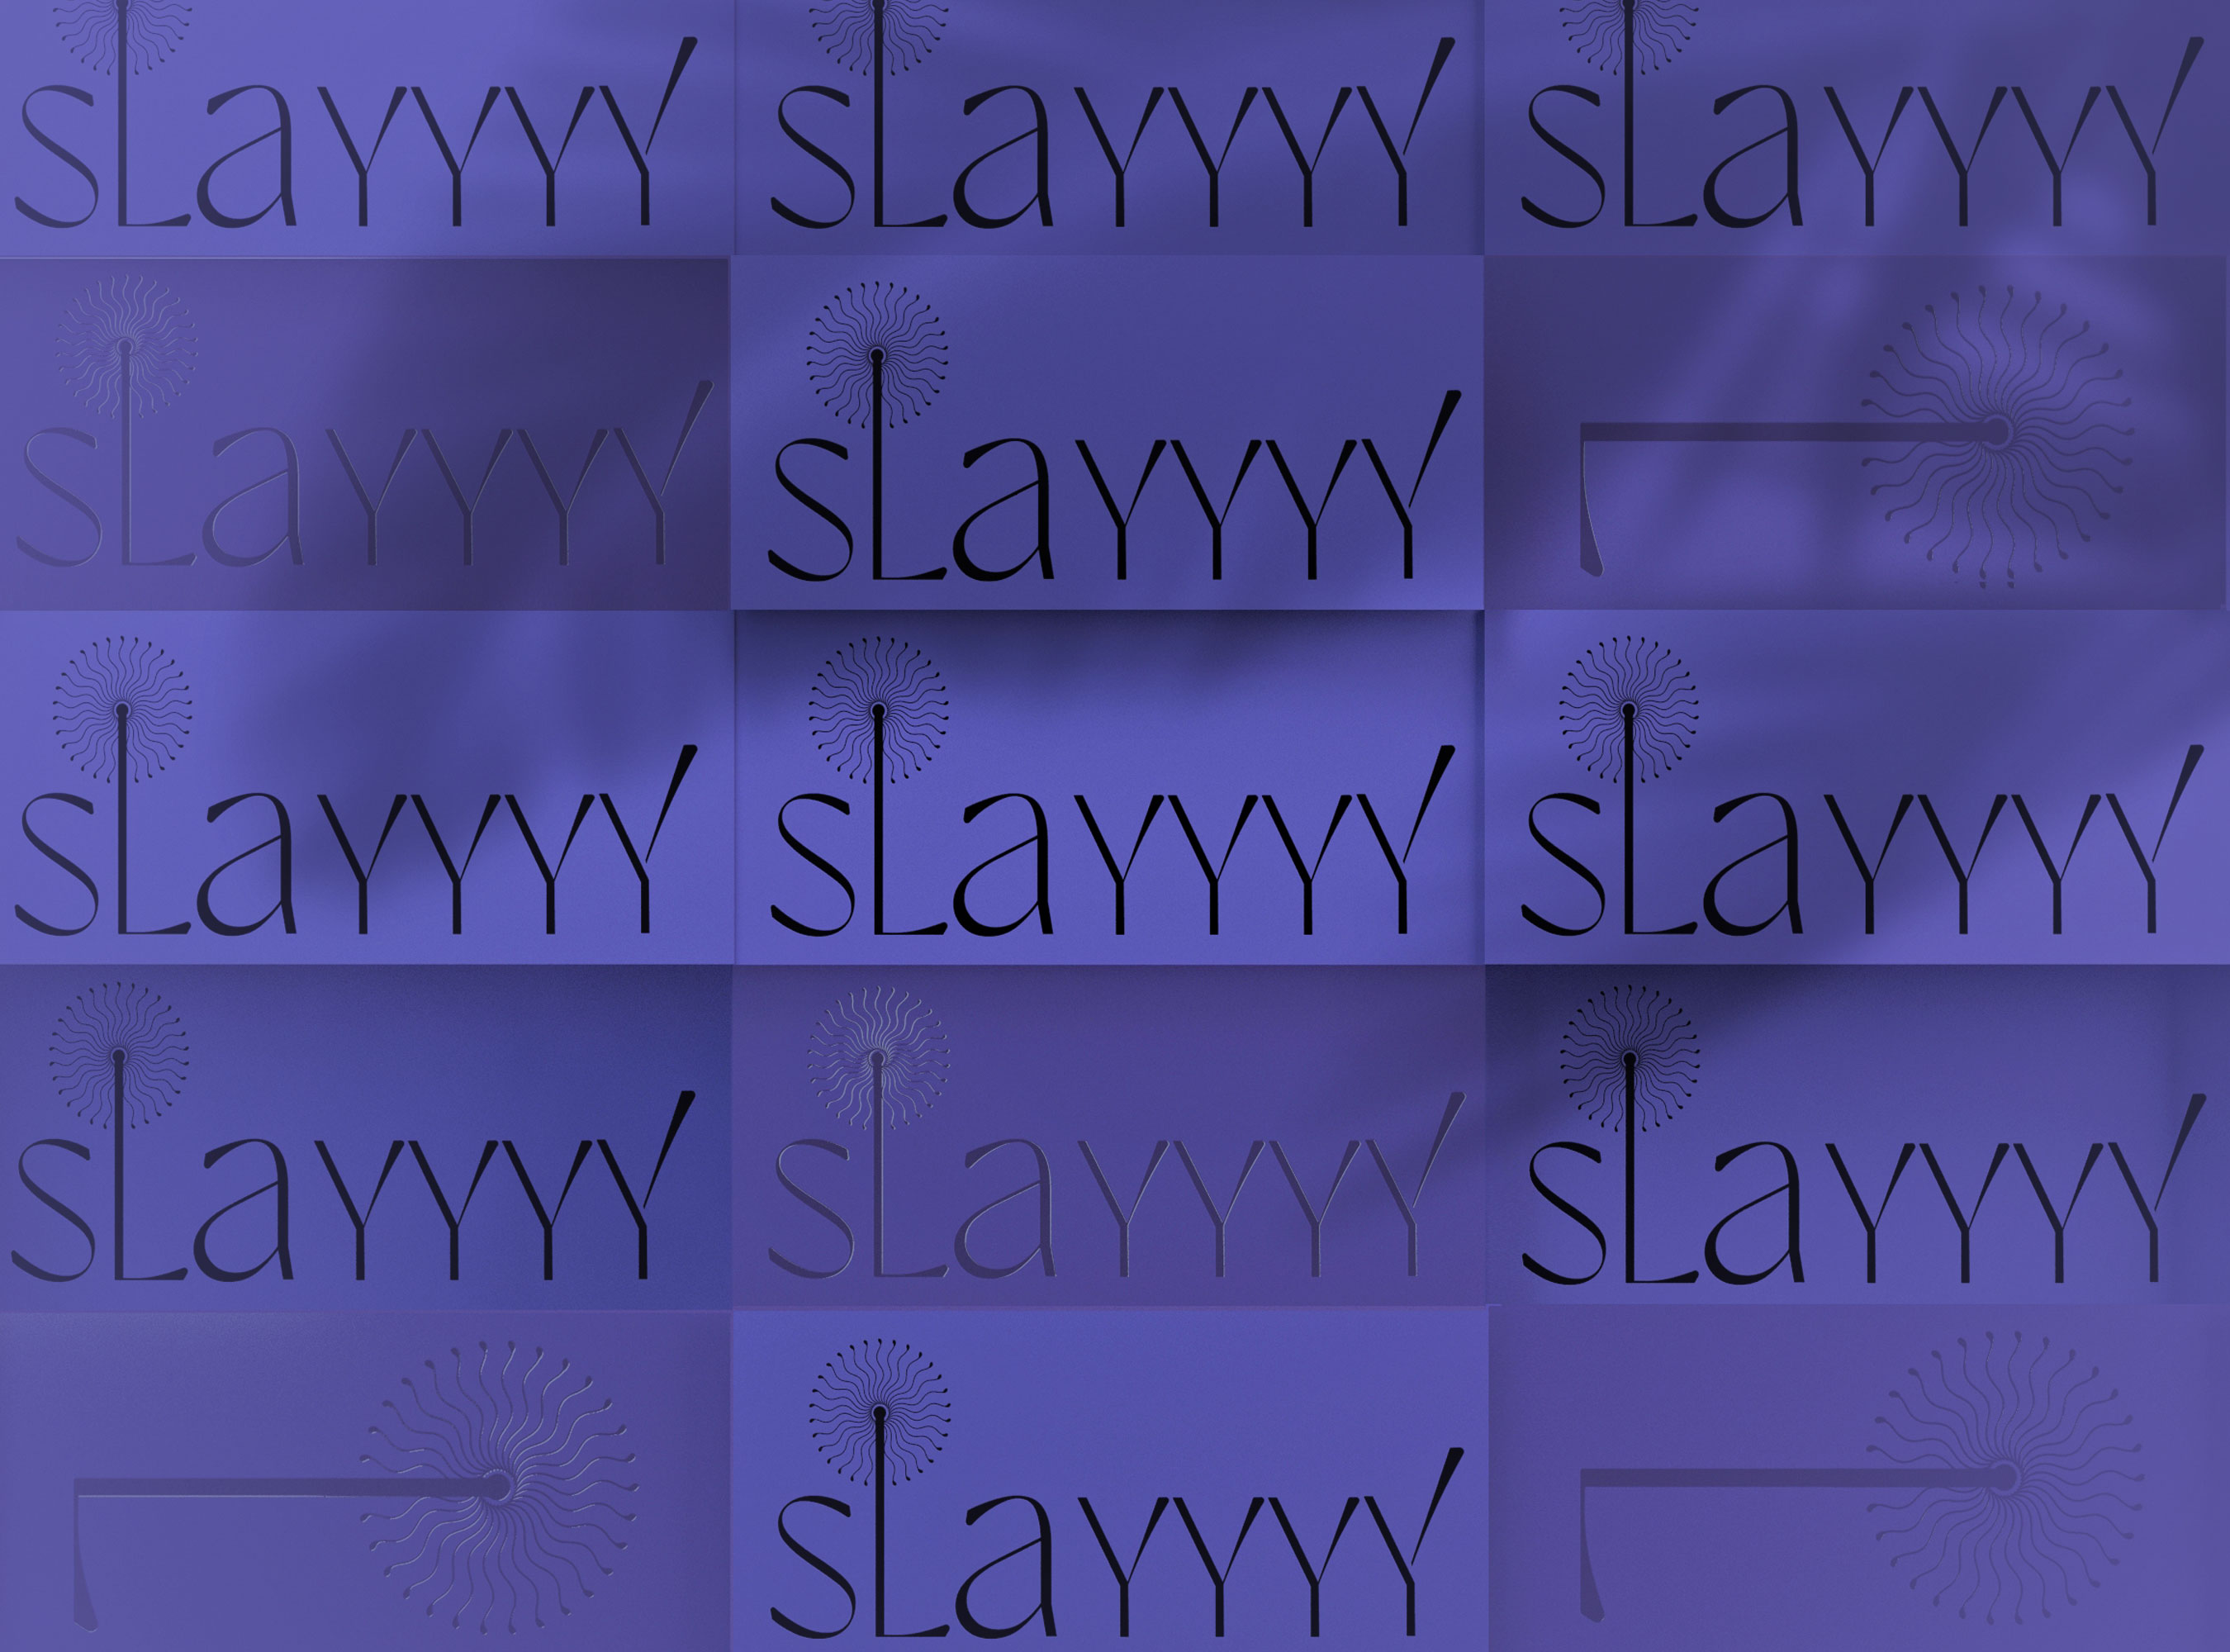 A Dynamic and Modern Brand Identity for Slayyyy by Creativebydefinition